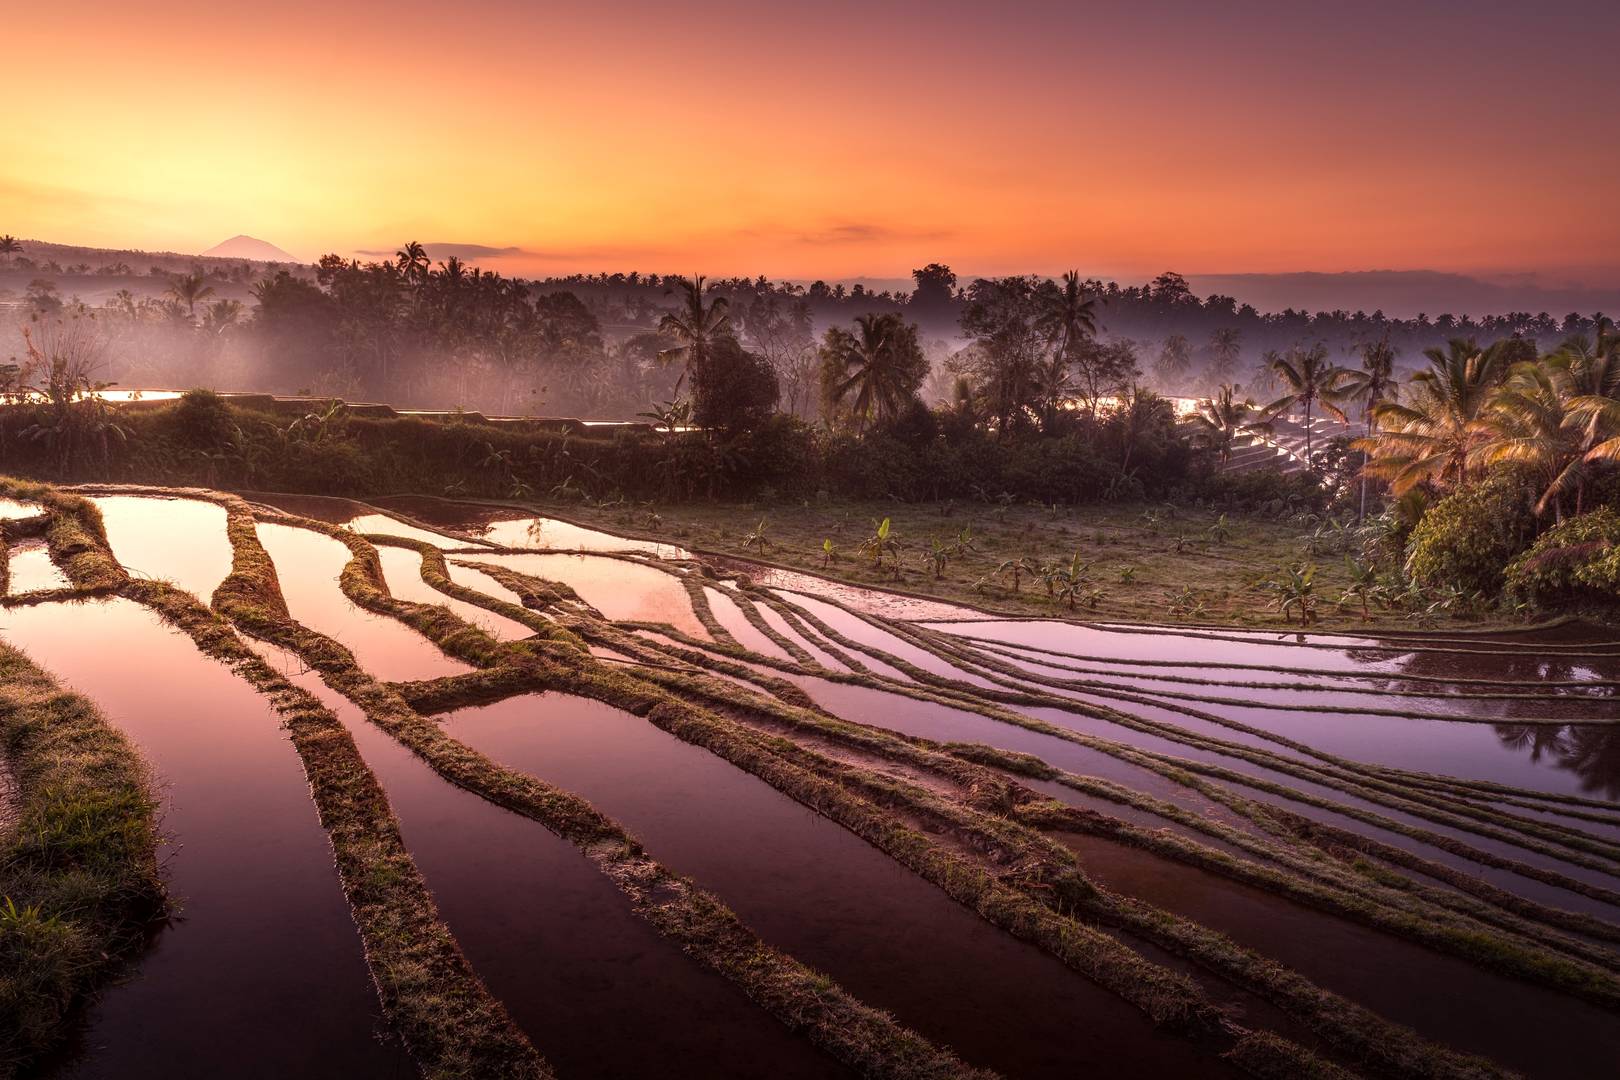 A Balinese rice terrace at sunrise